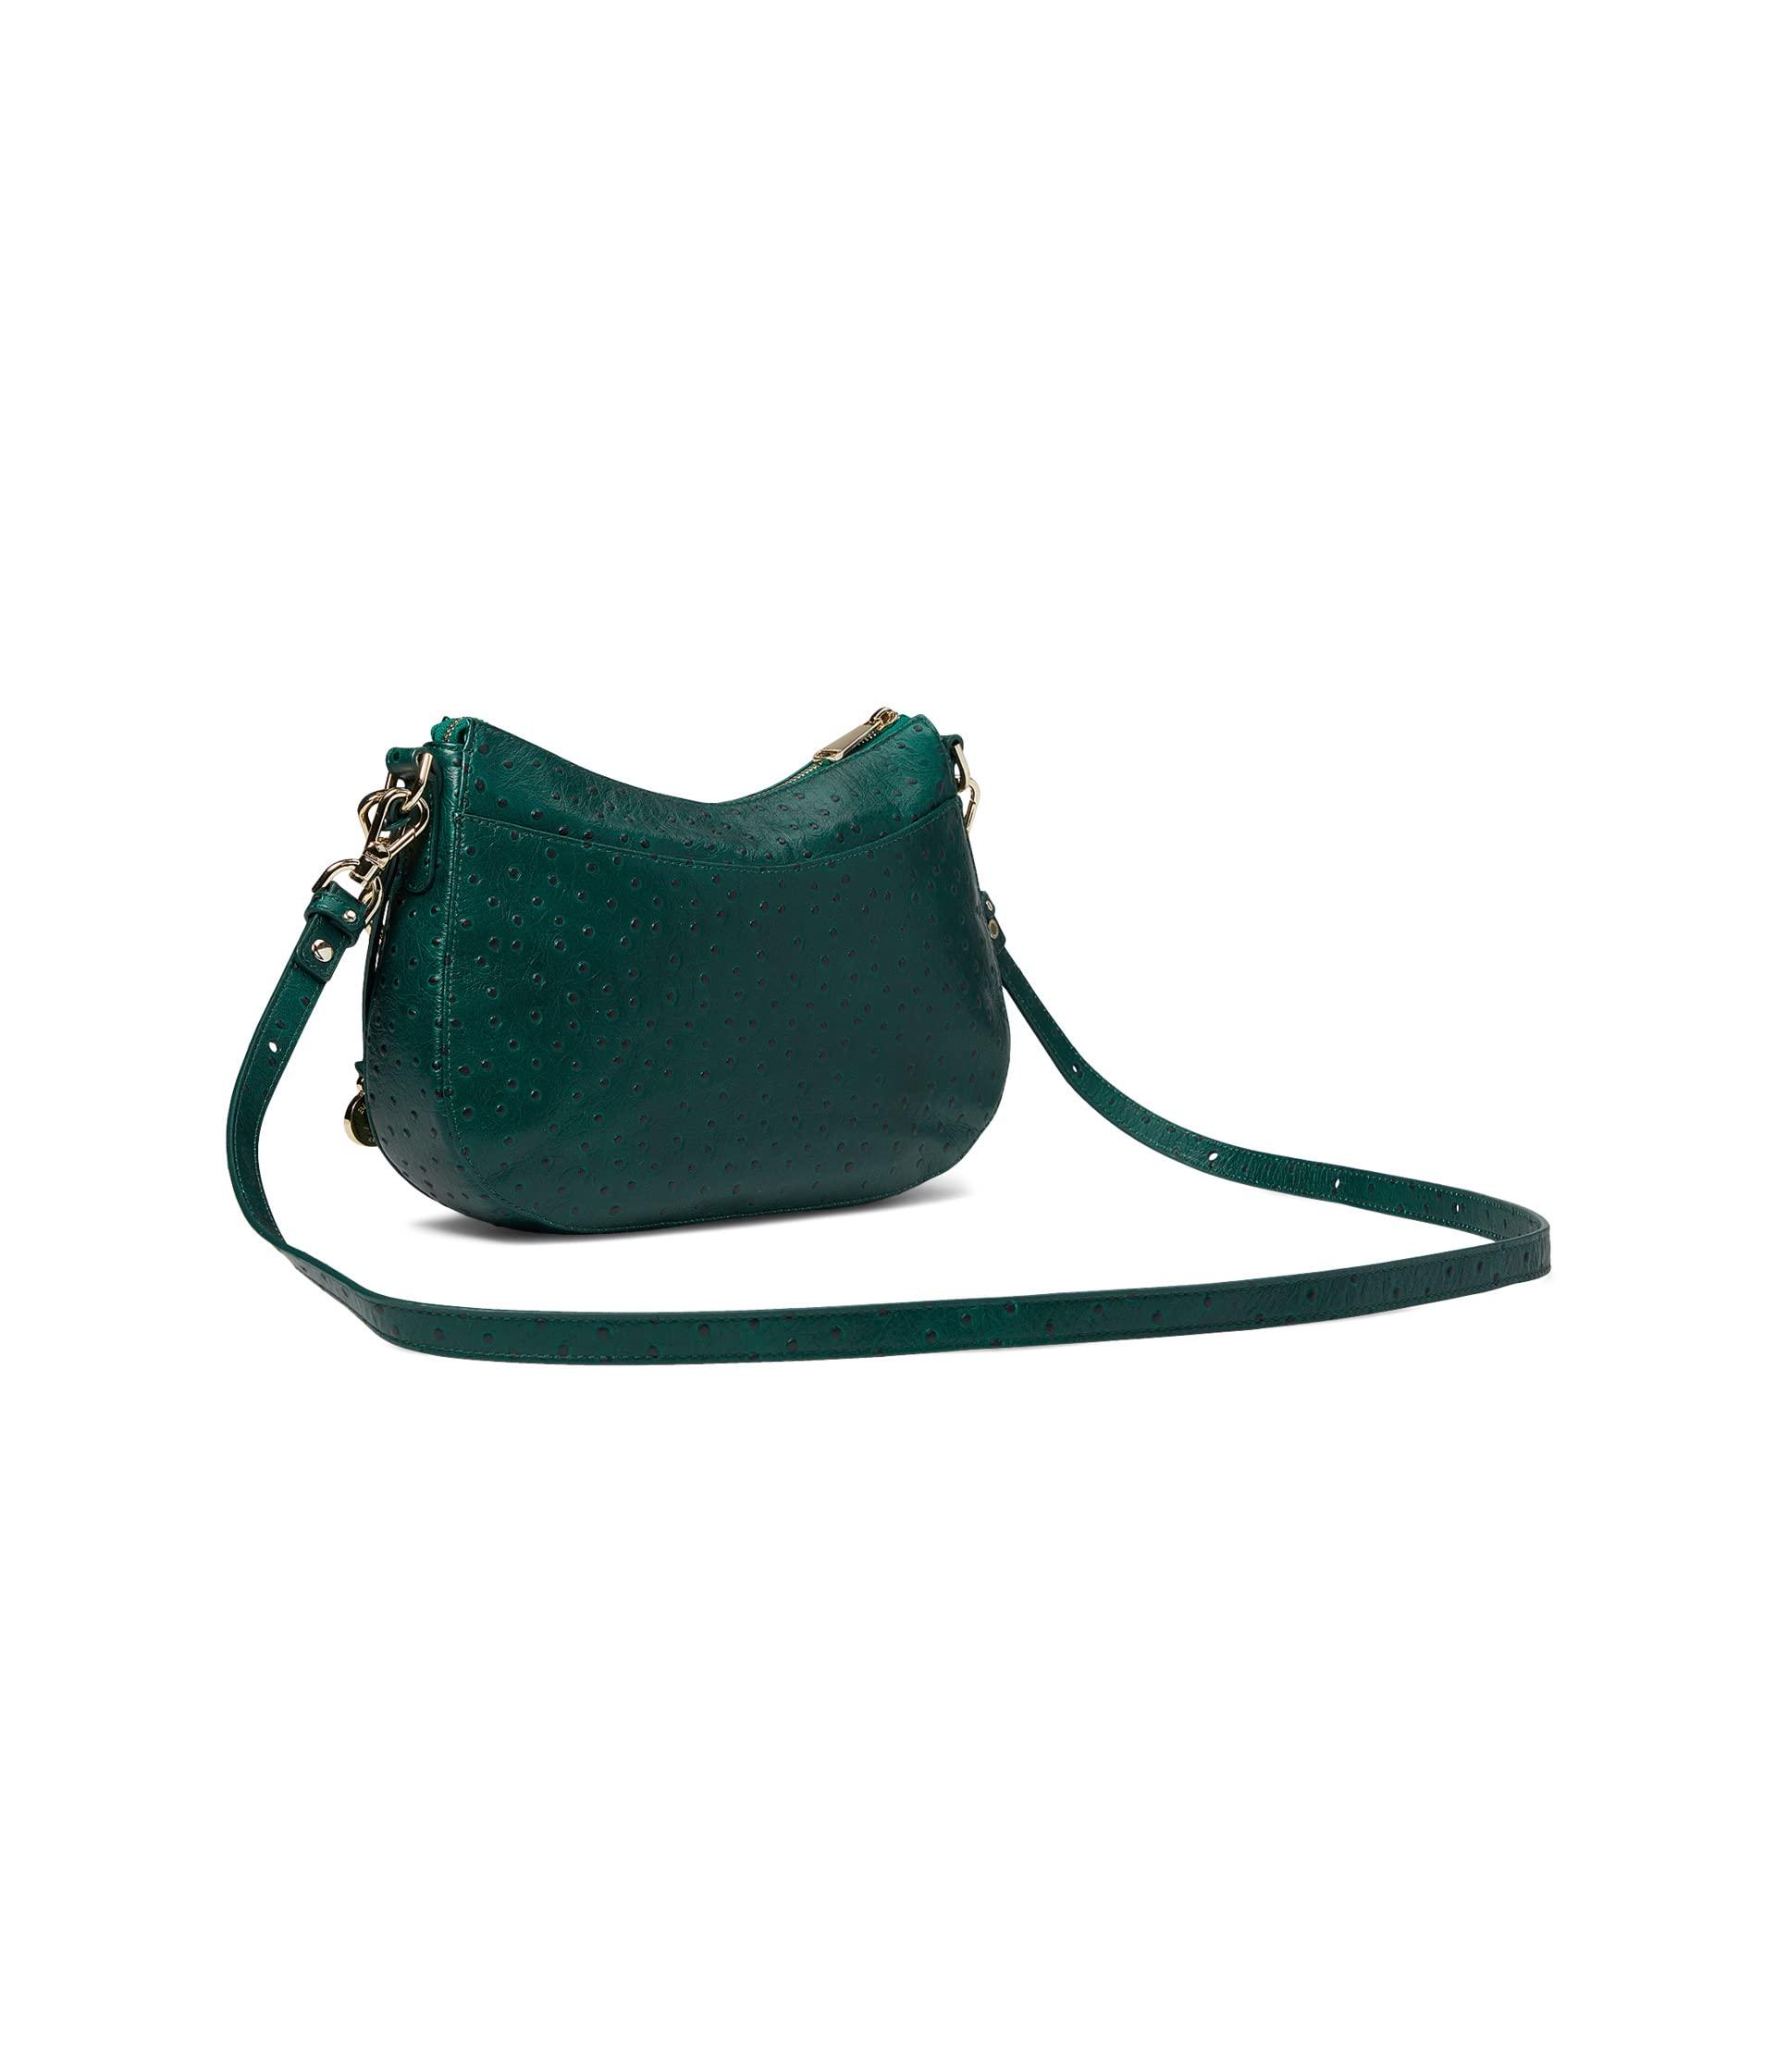 Green bag  Bags, Brahmin handbags, Fashion bags